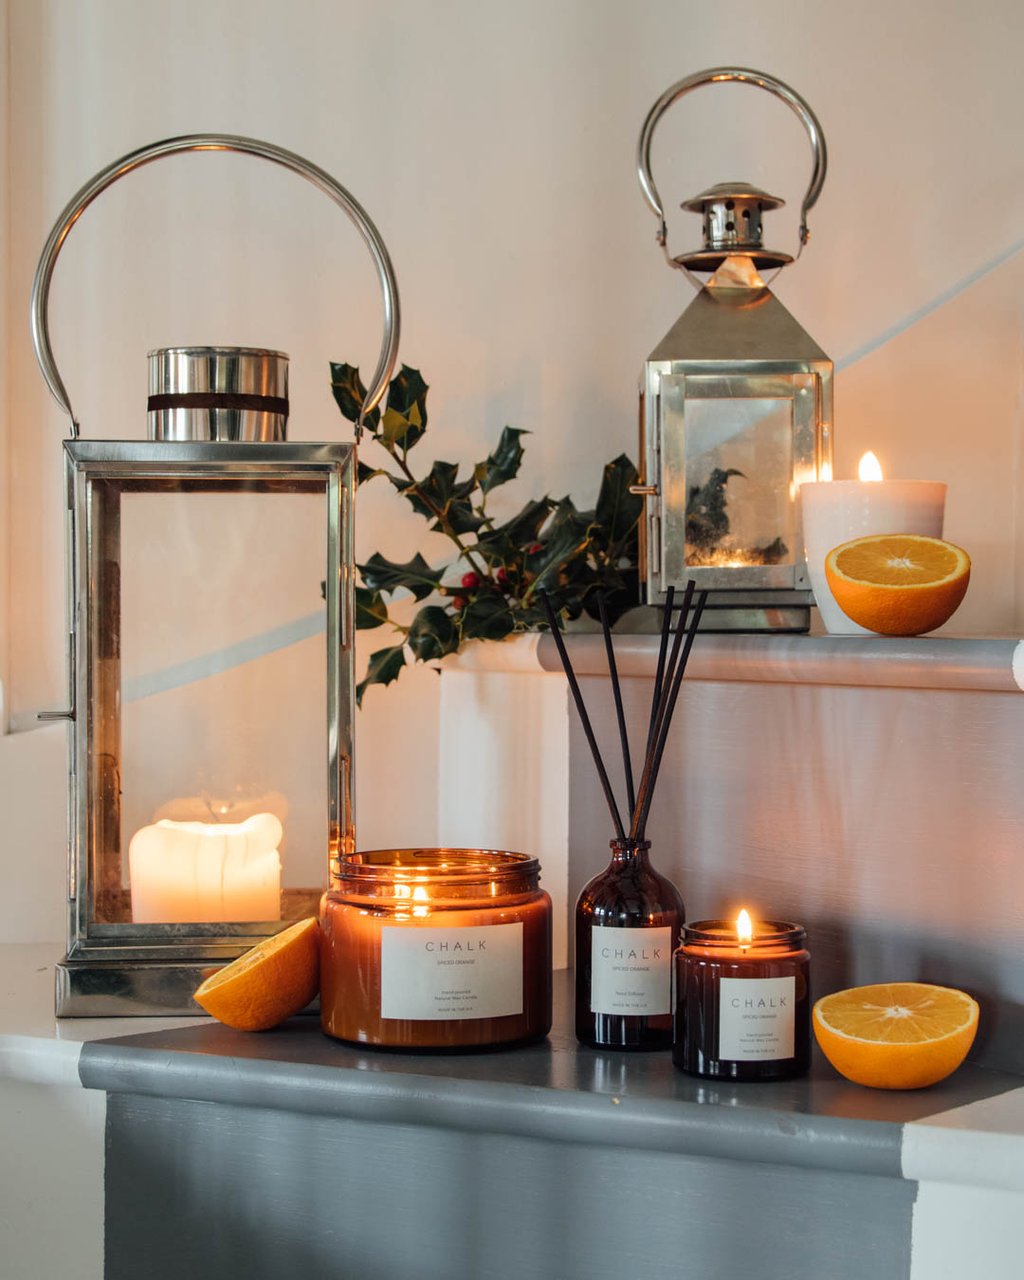 Chalk Amber Jar Candle | Spiced Orange | 410g